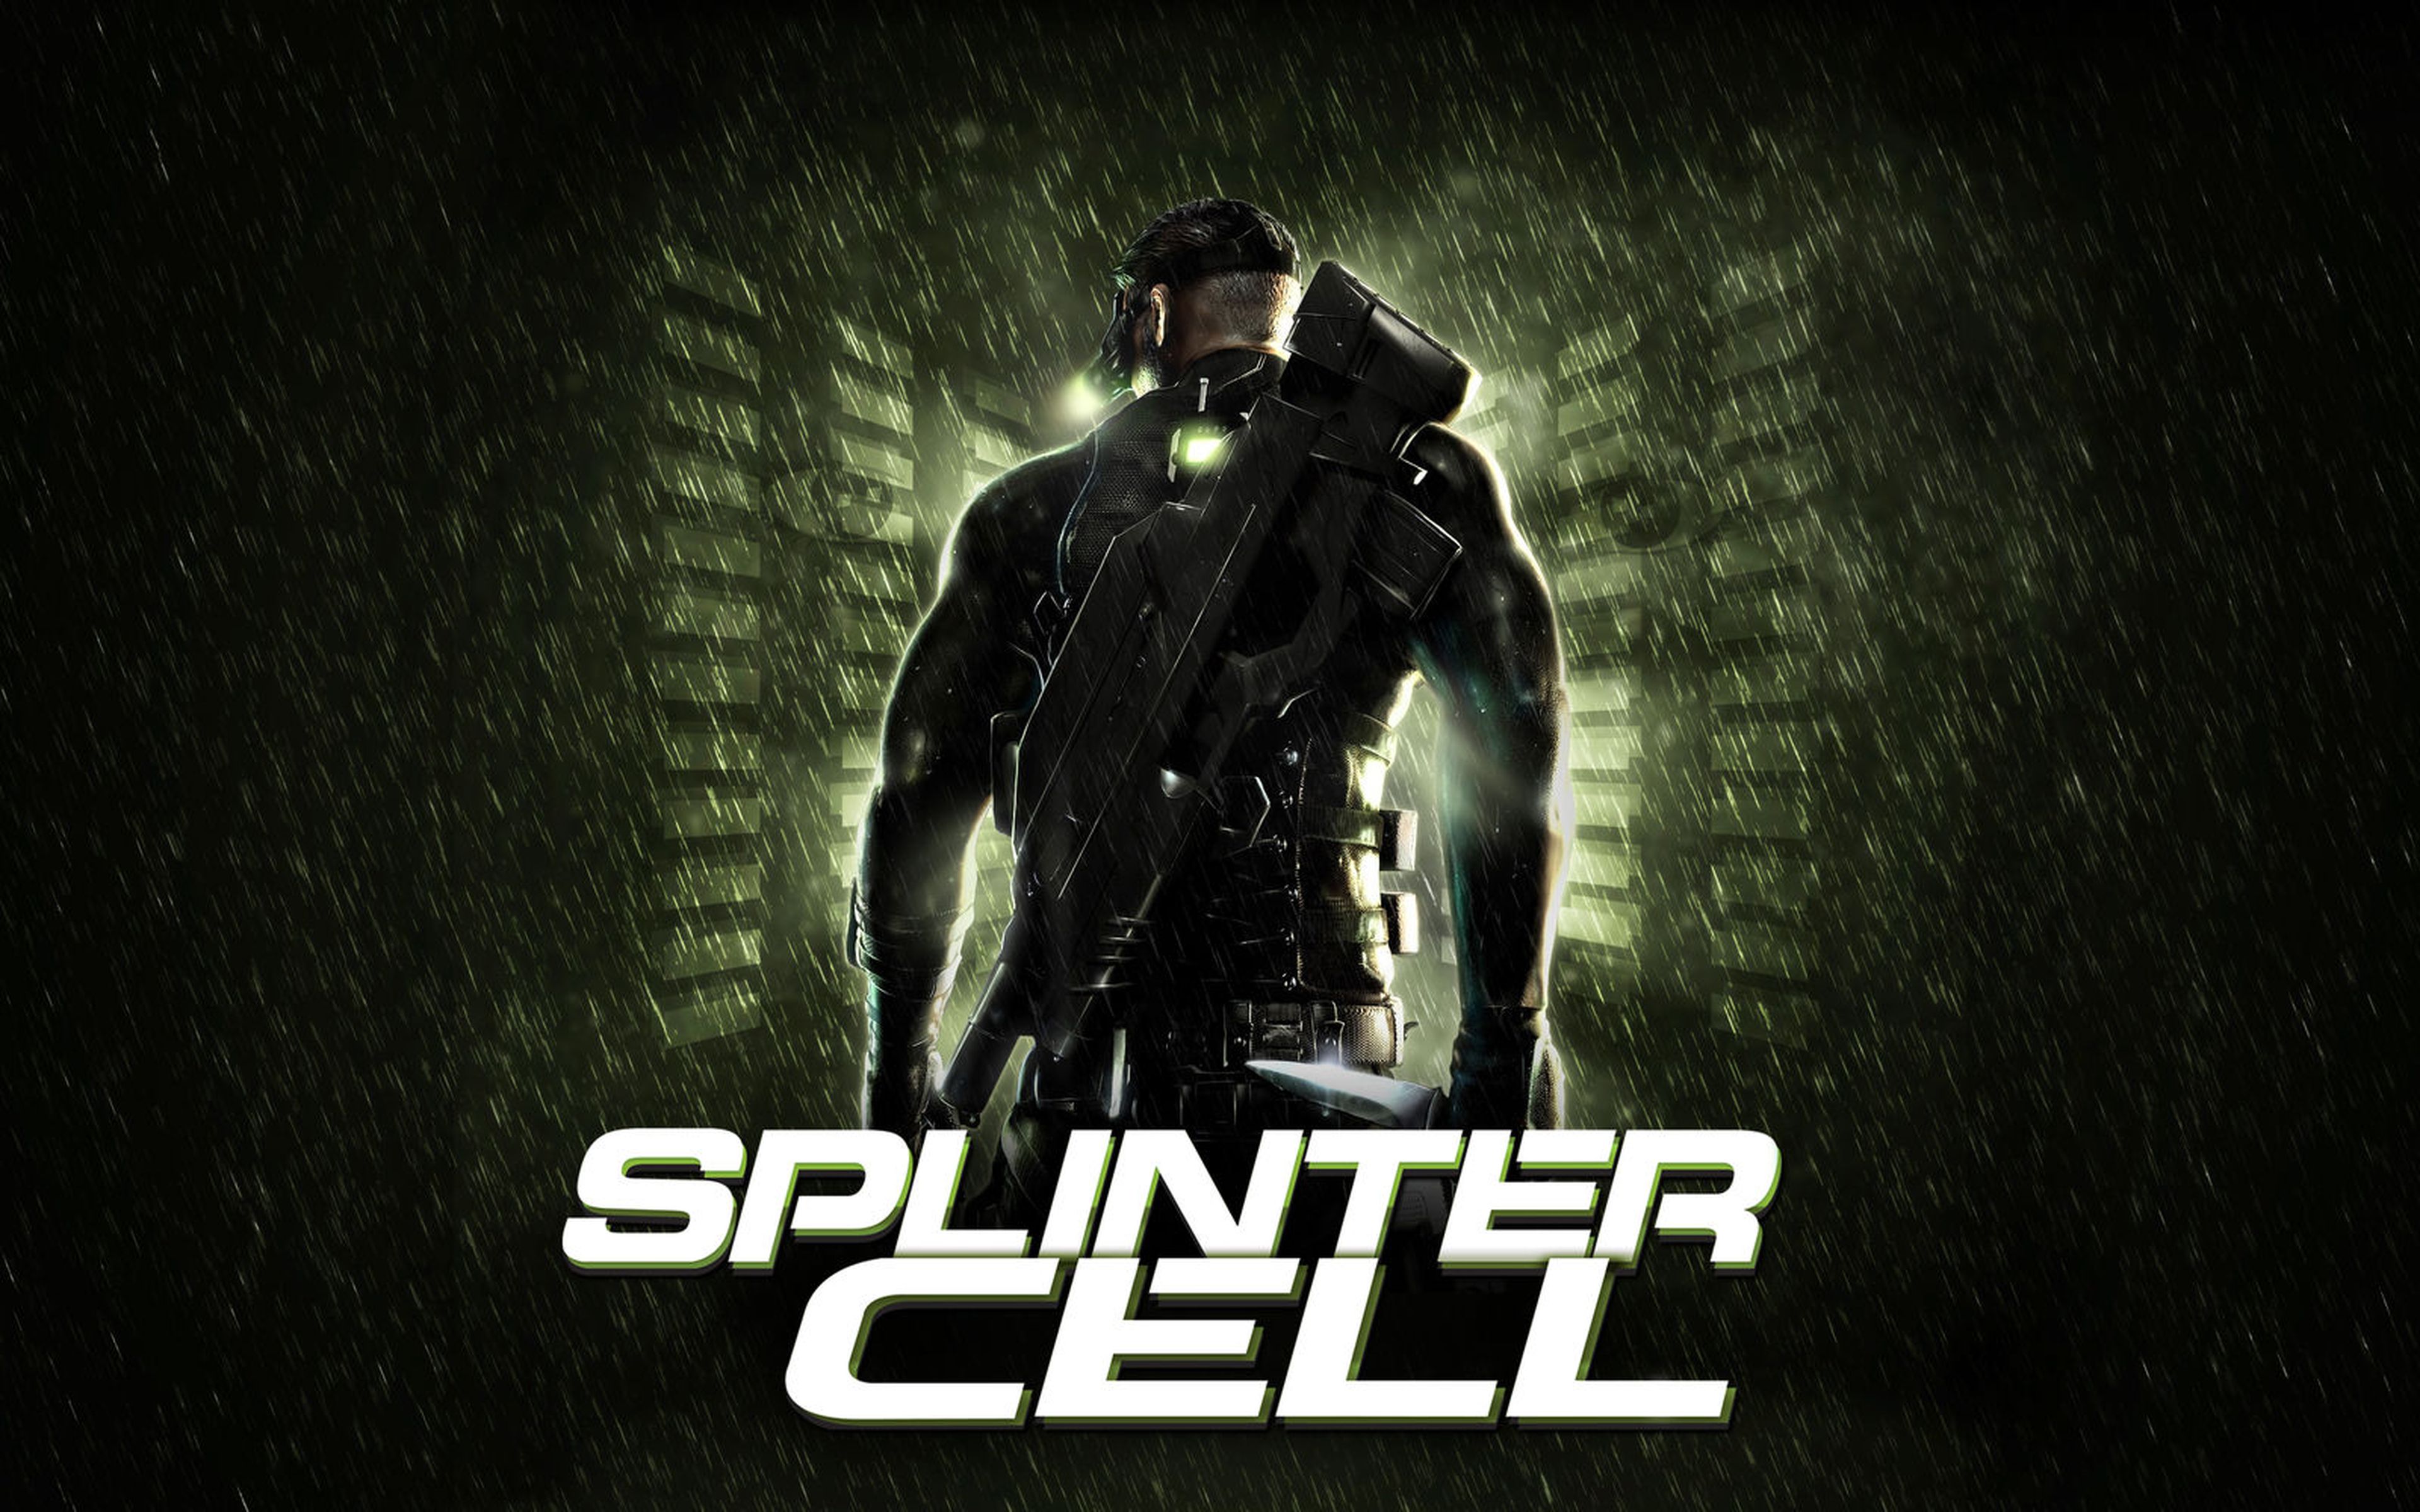 Сплинтер селл 1. Splinter Cell 1 обложка. Tom Clancy s Splinter Cell 2002. Ламберт Splinter Cell. Tom Clancy's Splinter Cell 2003.